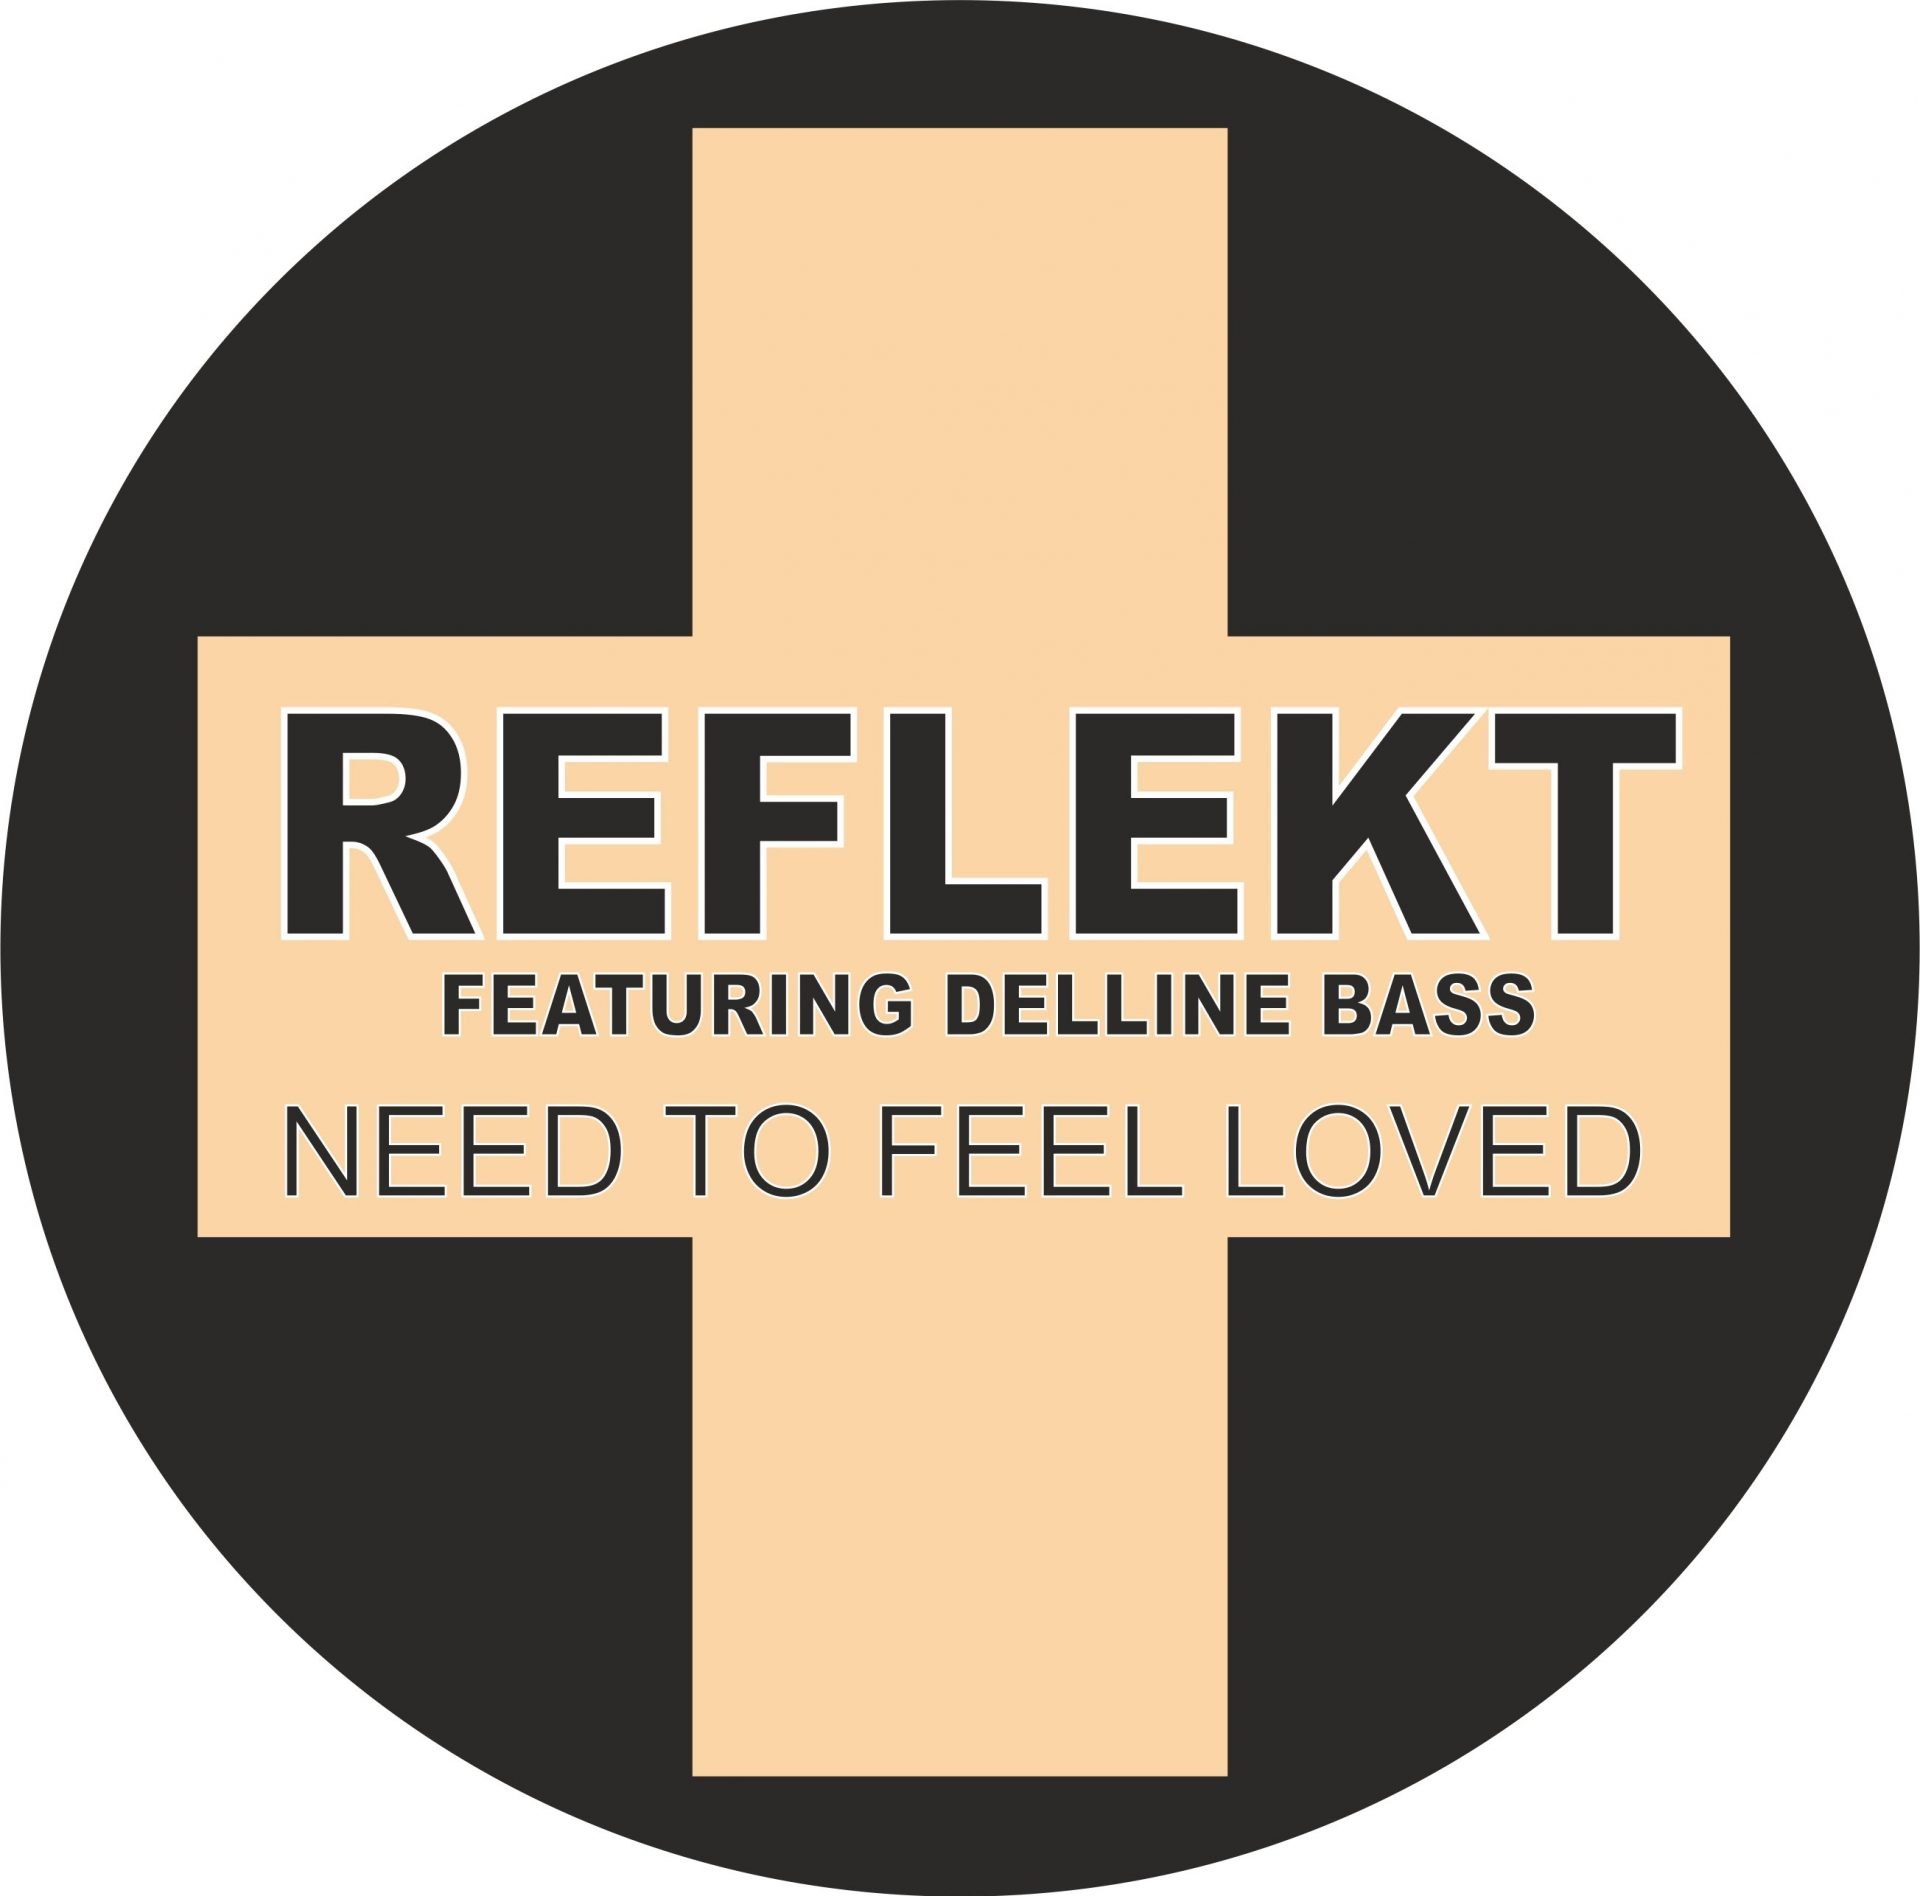 Reflekt delline need to feel loved. Reflekt ft. Delline Bass need to feel Loved. Reflekt feat. Delline Bass. Reflekt need to feel Loved. Adam k Soha need to feel Loved.